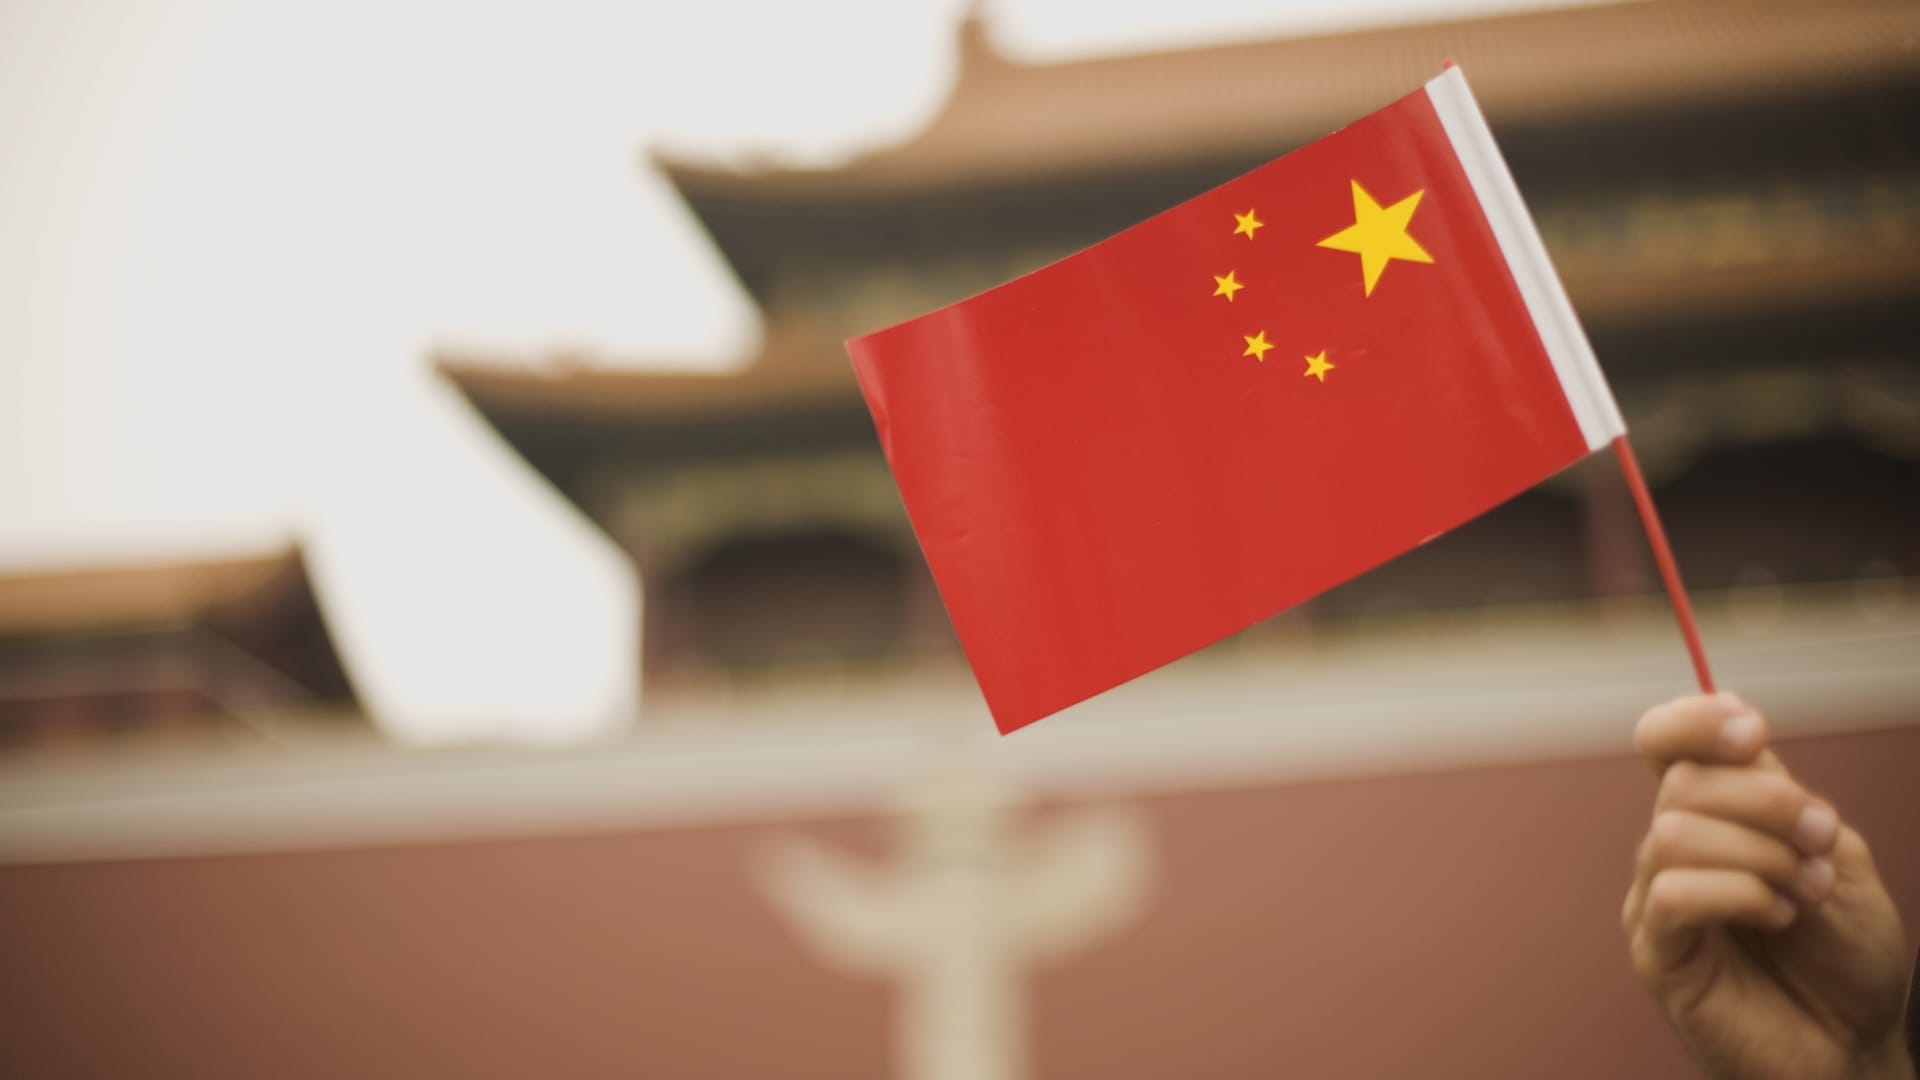 China's national flag